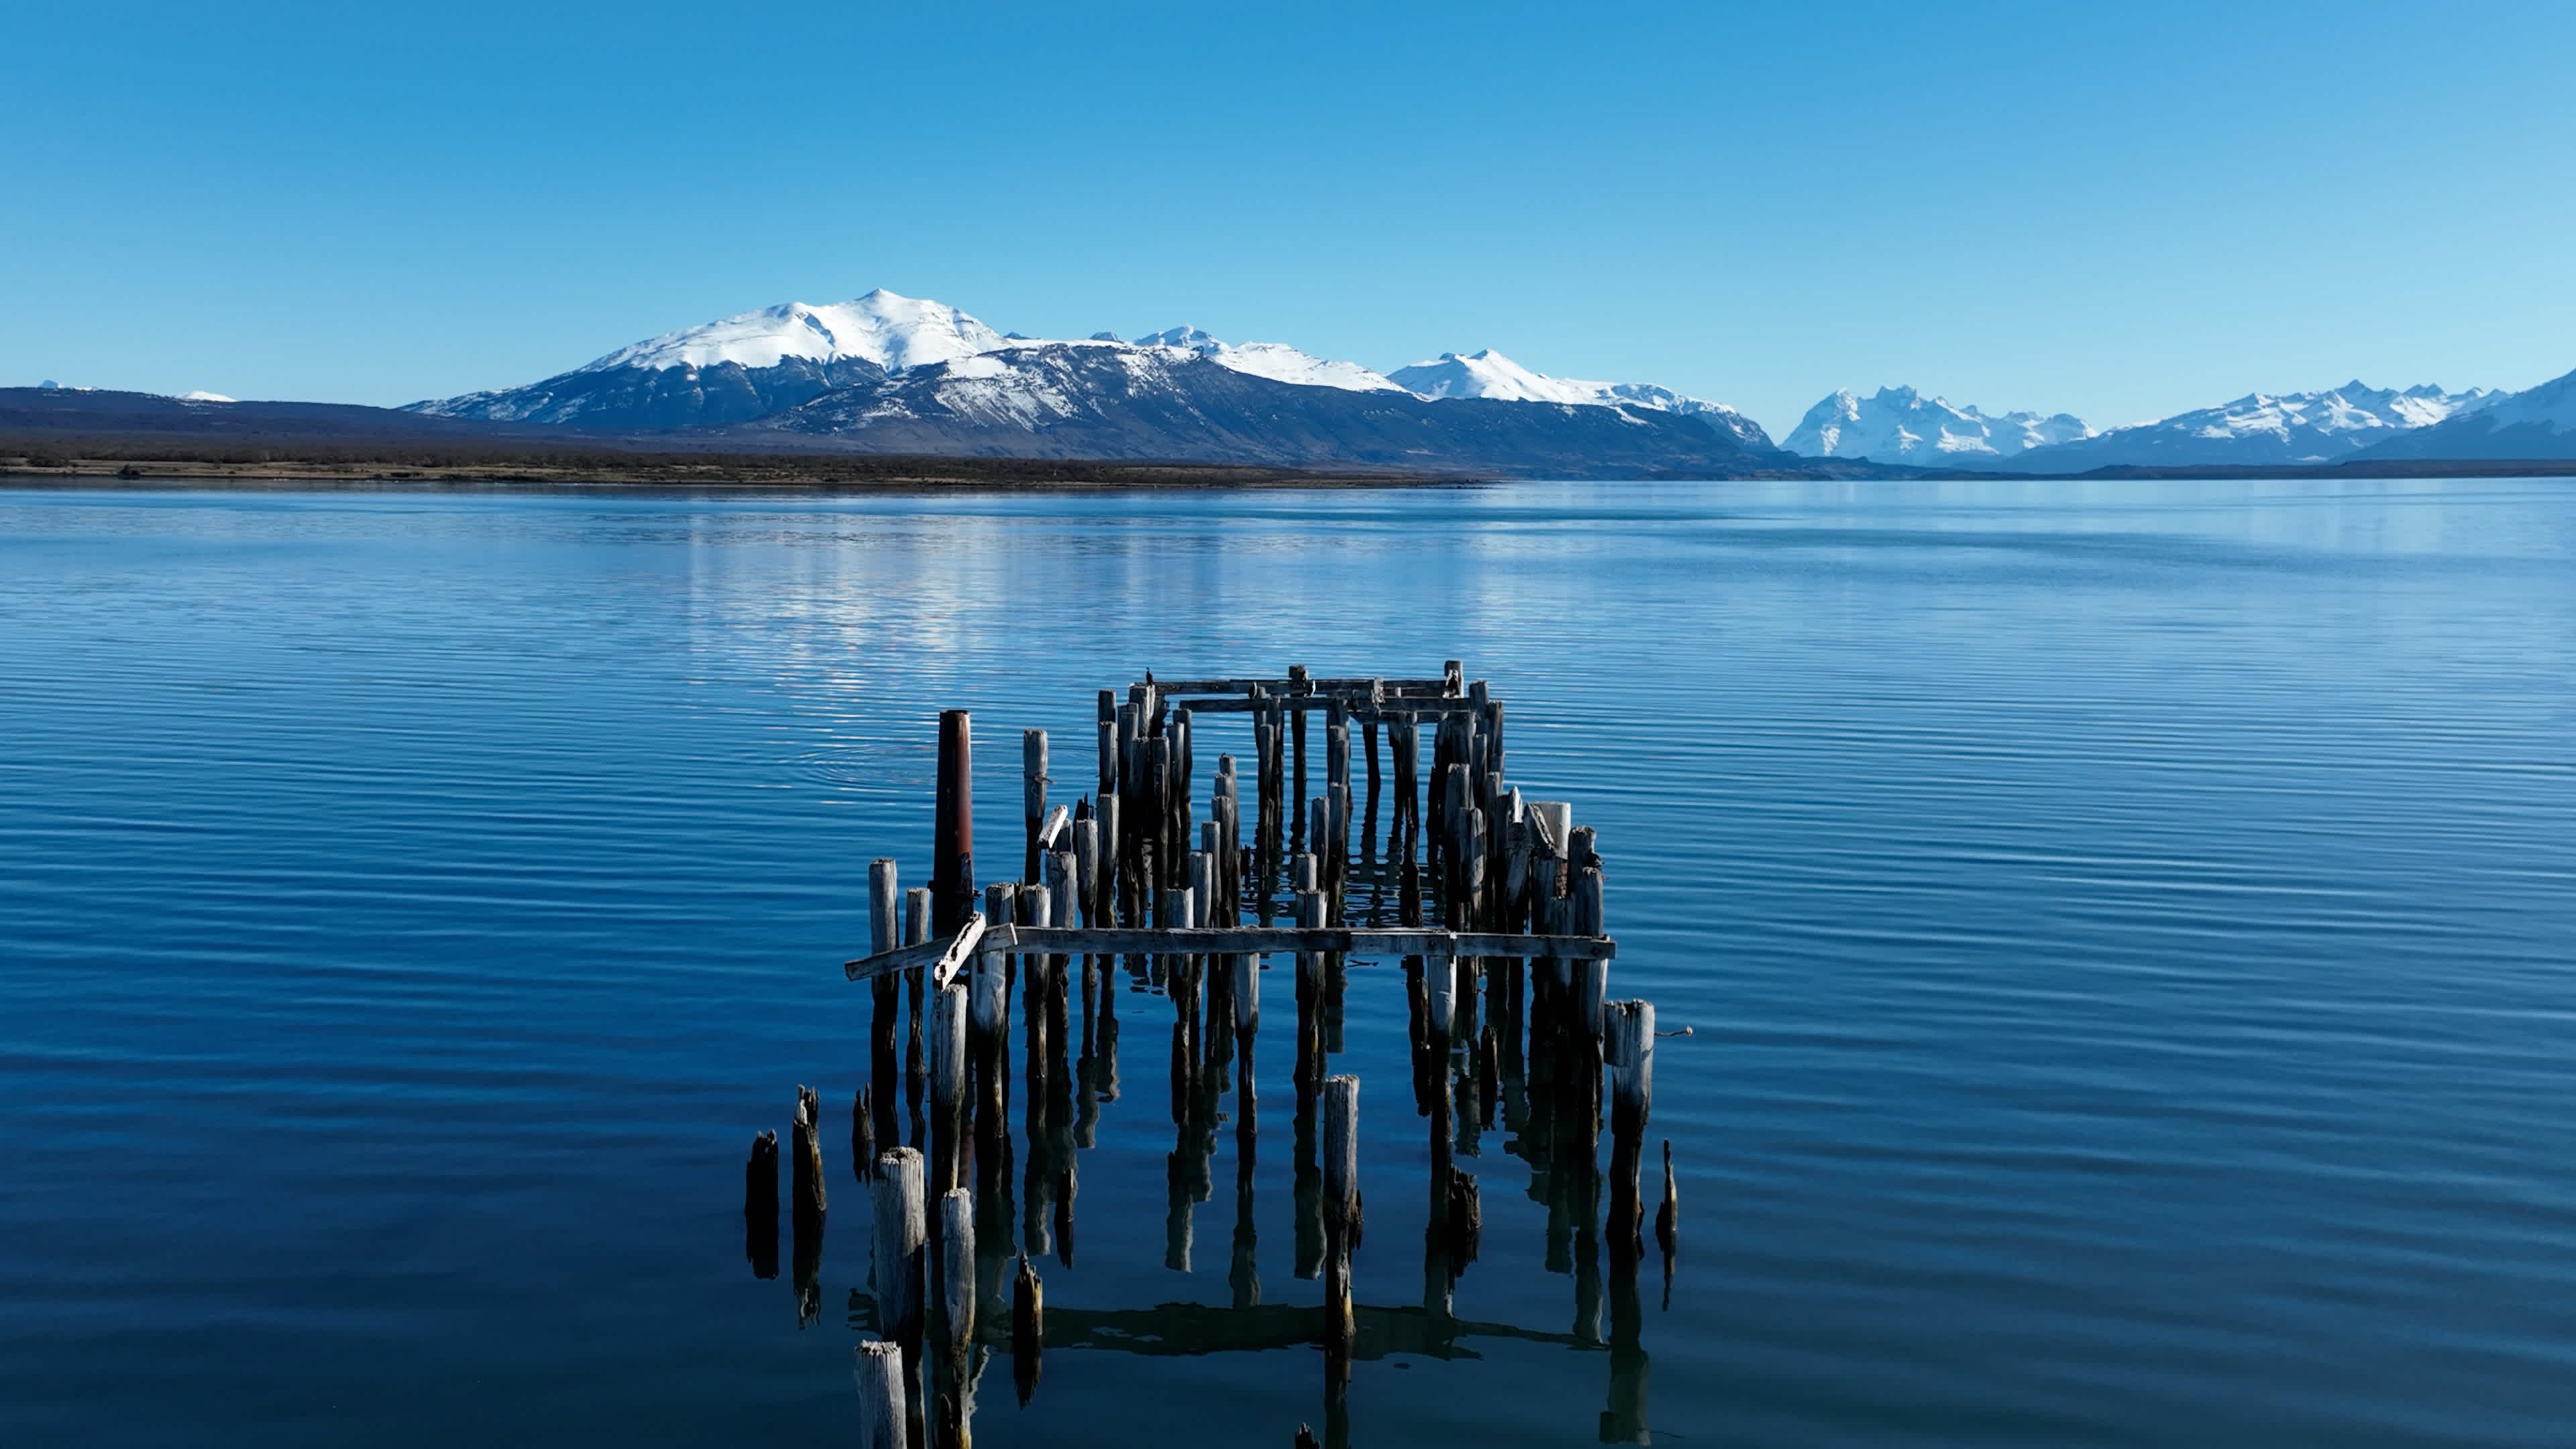 Berühmter Pier in Puerto Natales in Magallanes, Chile.

